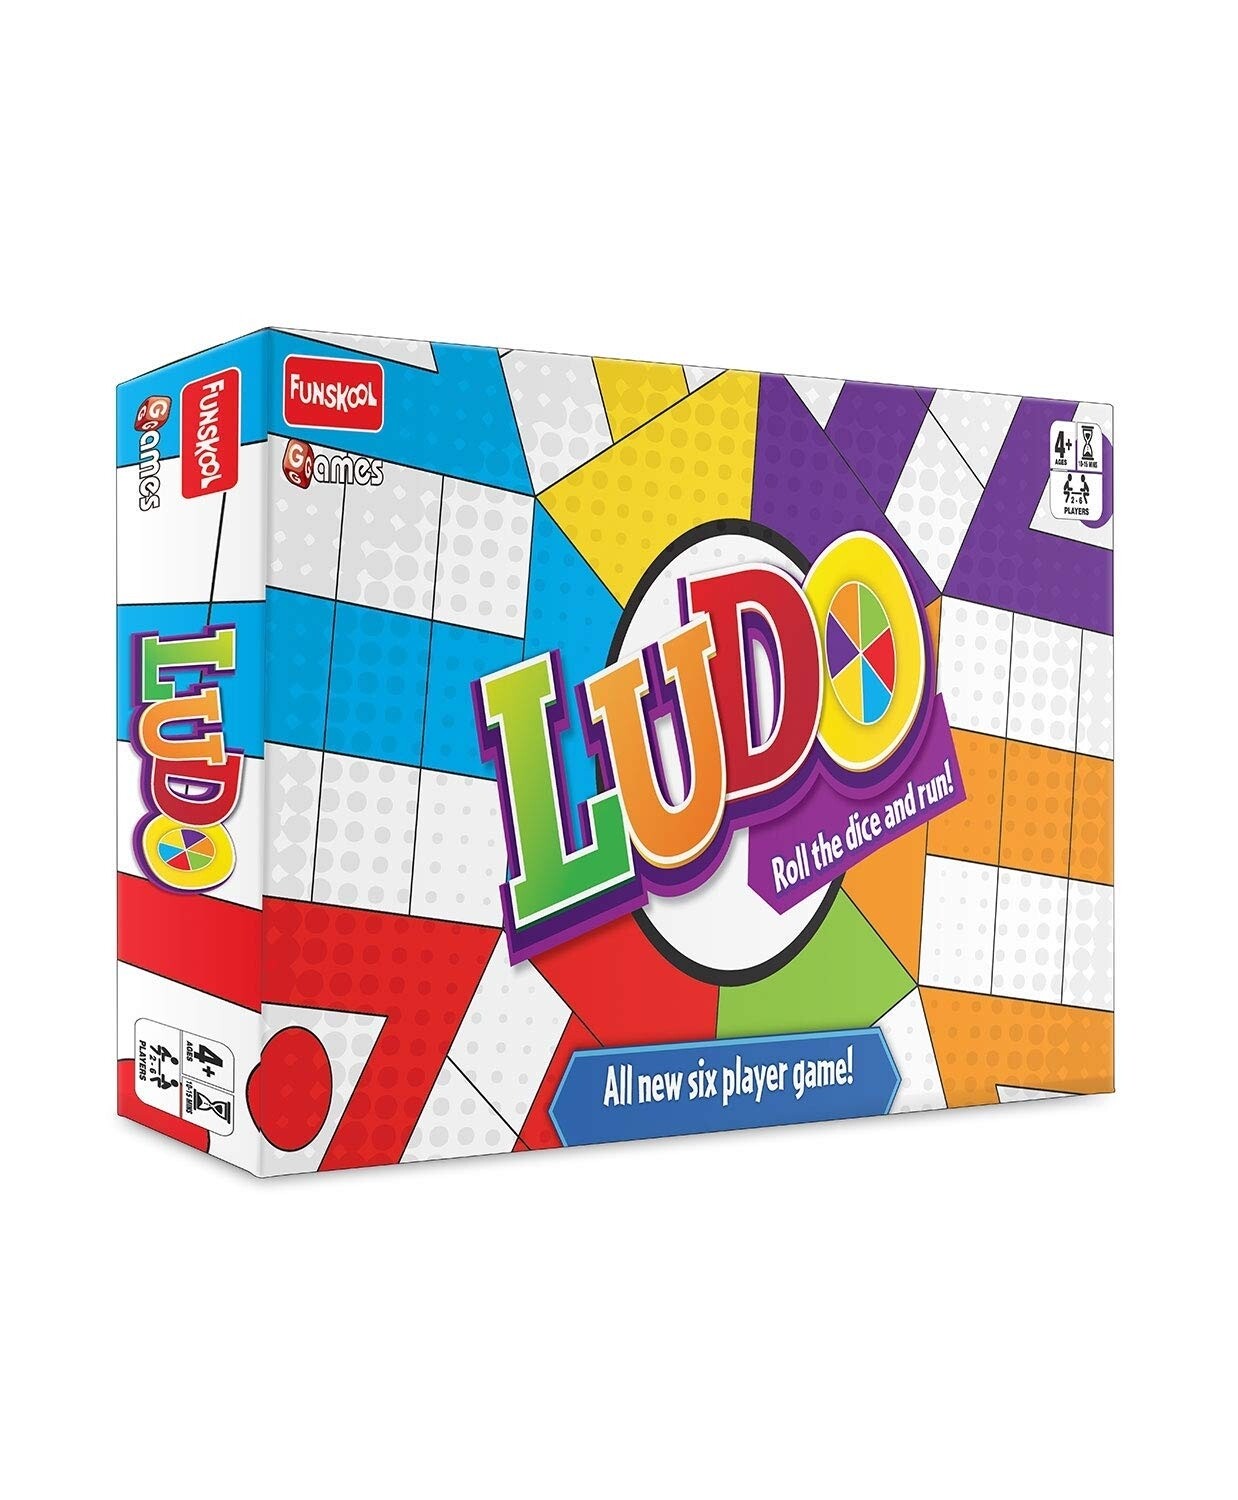 LUDO Game Small Size - Code 116305